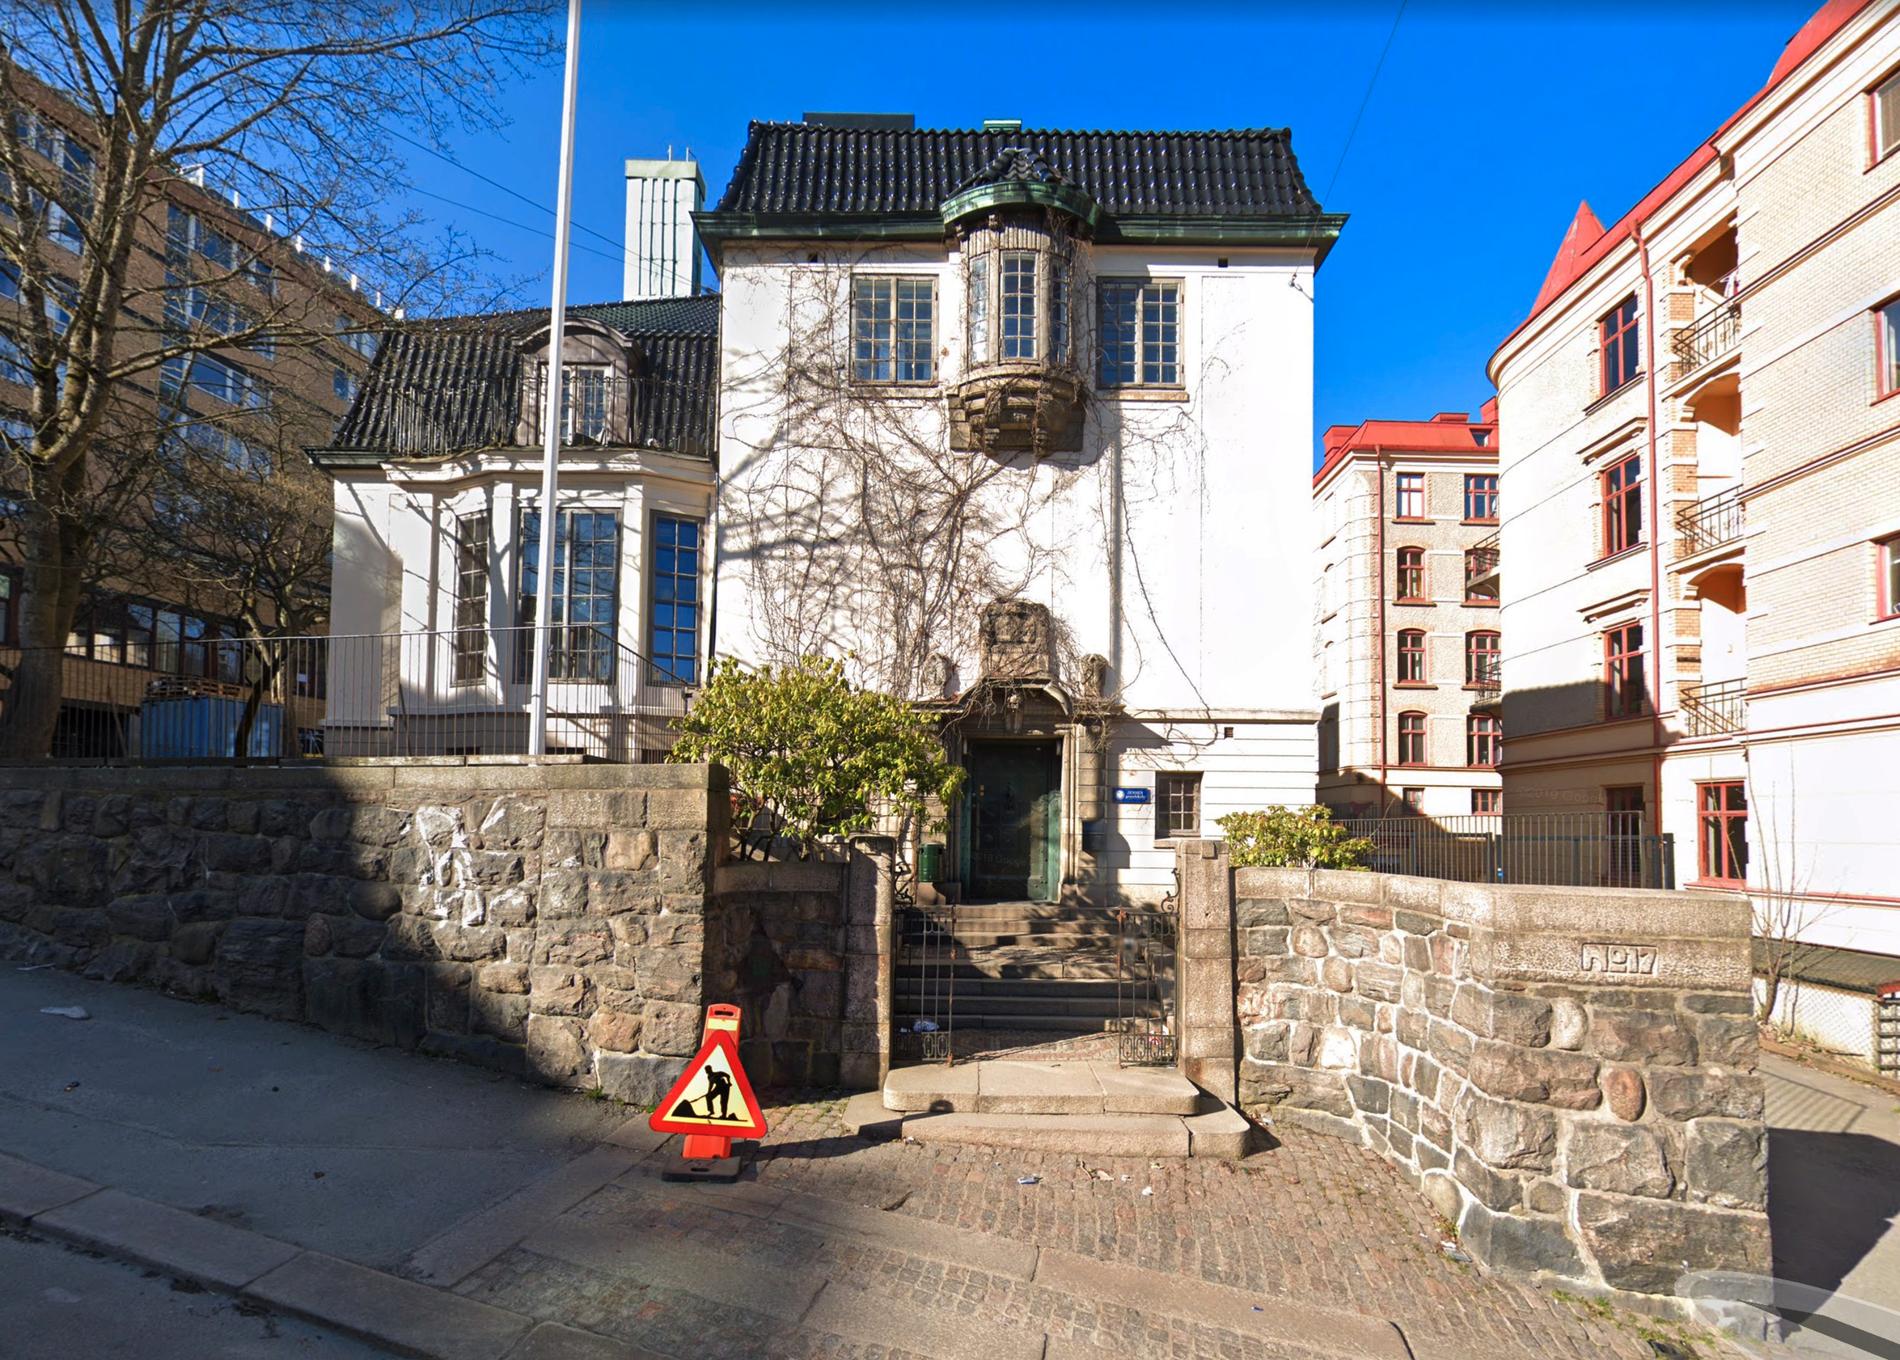 Jensens grundskola i Göteborg.